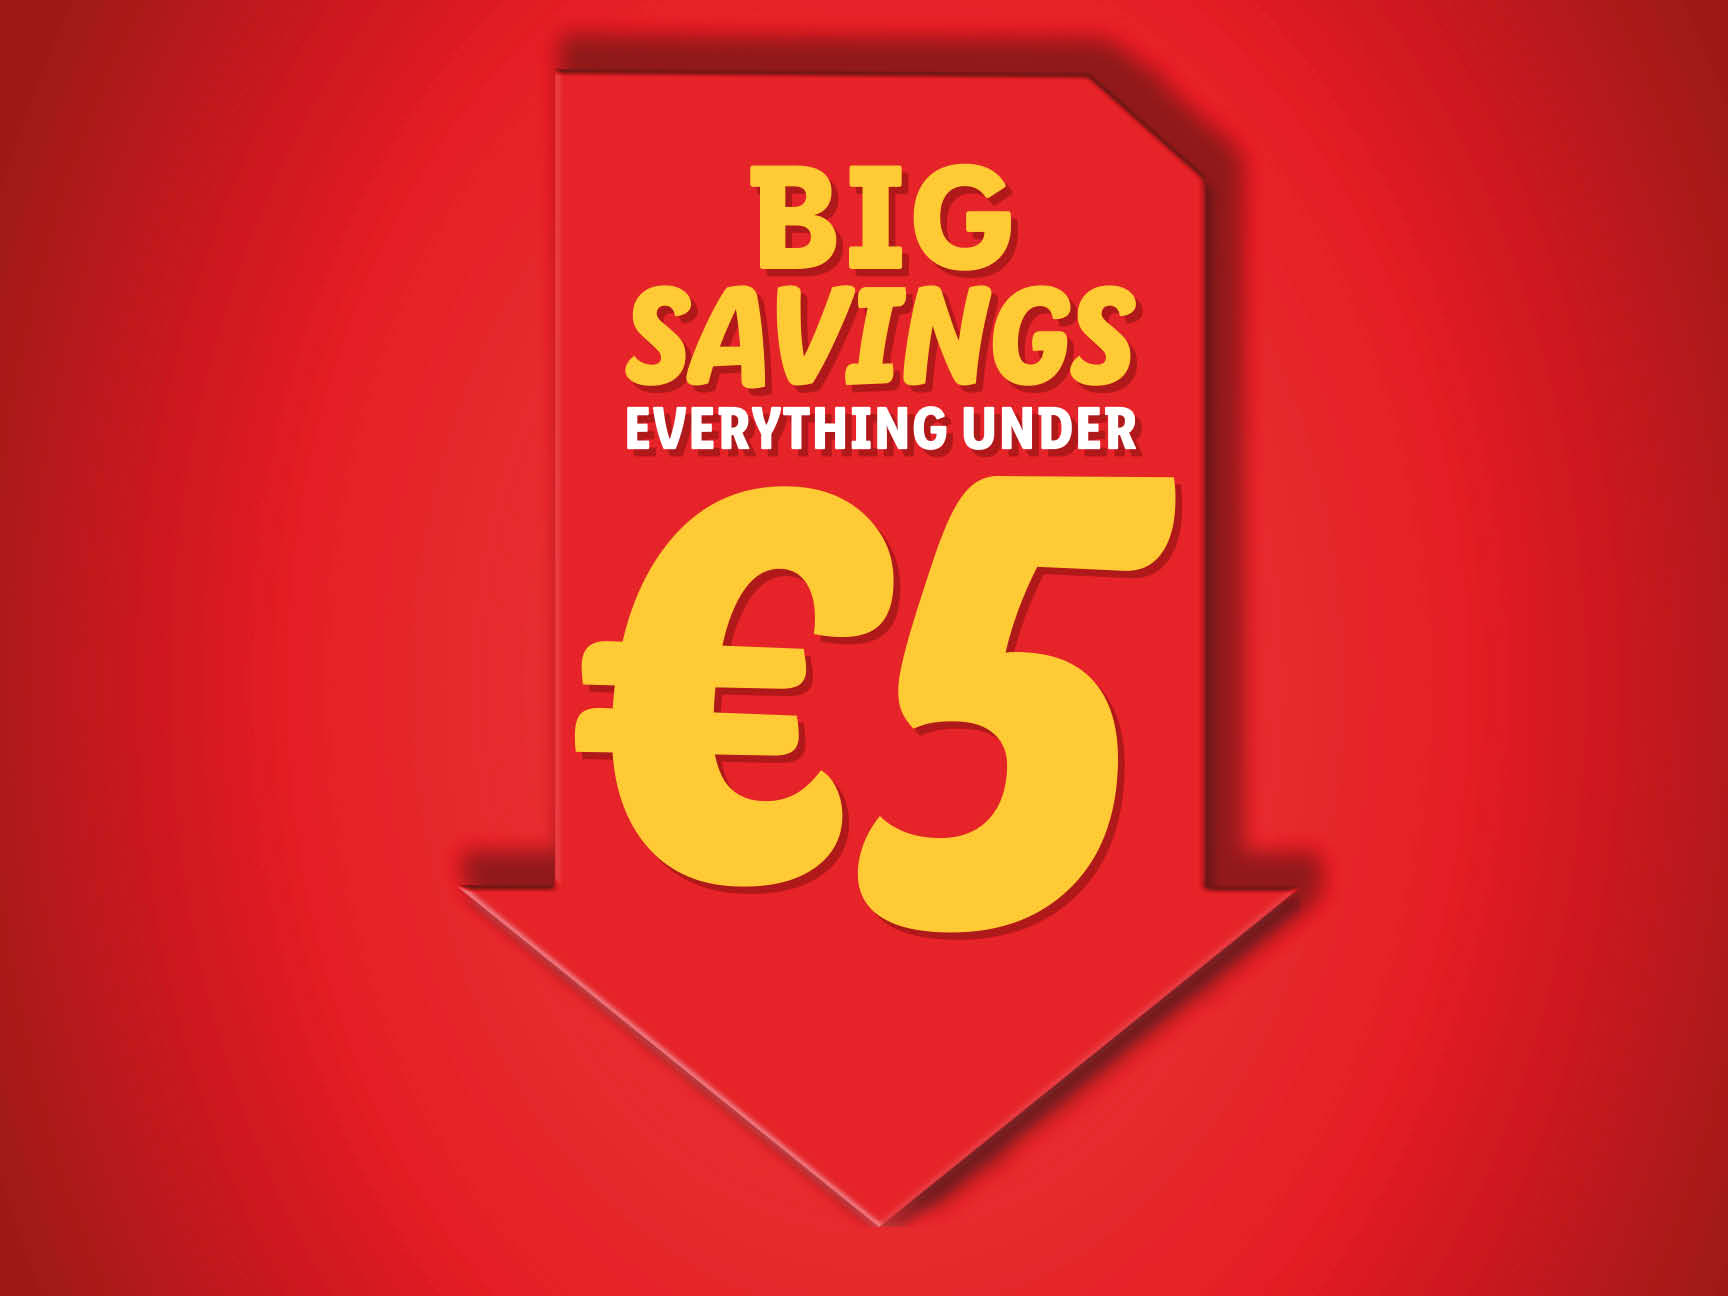 BIG SAVINGS Everything under €5